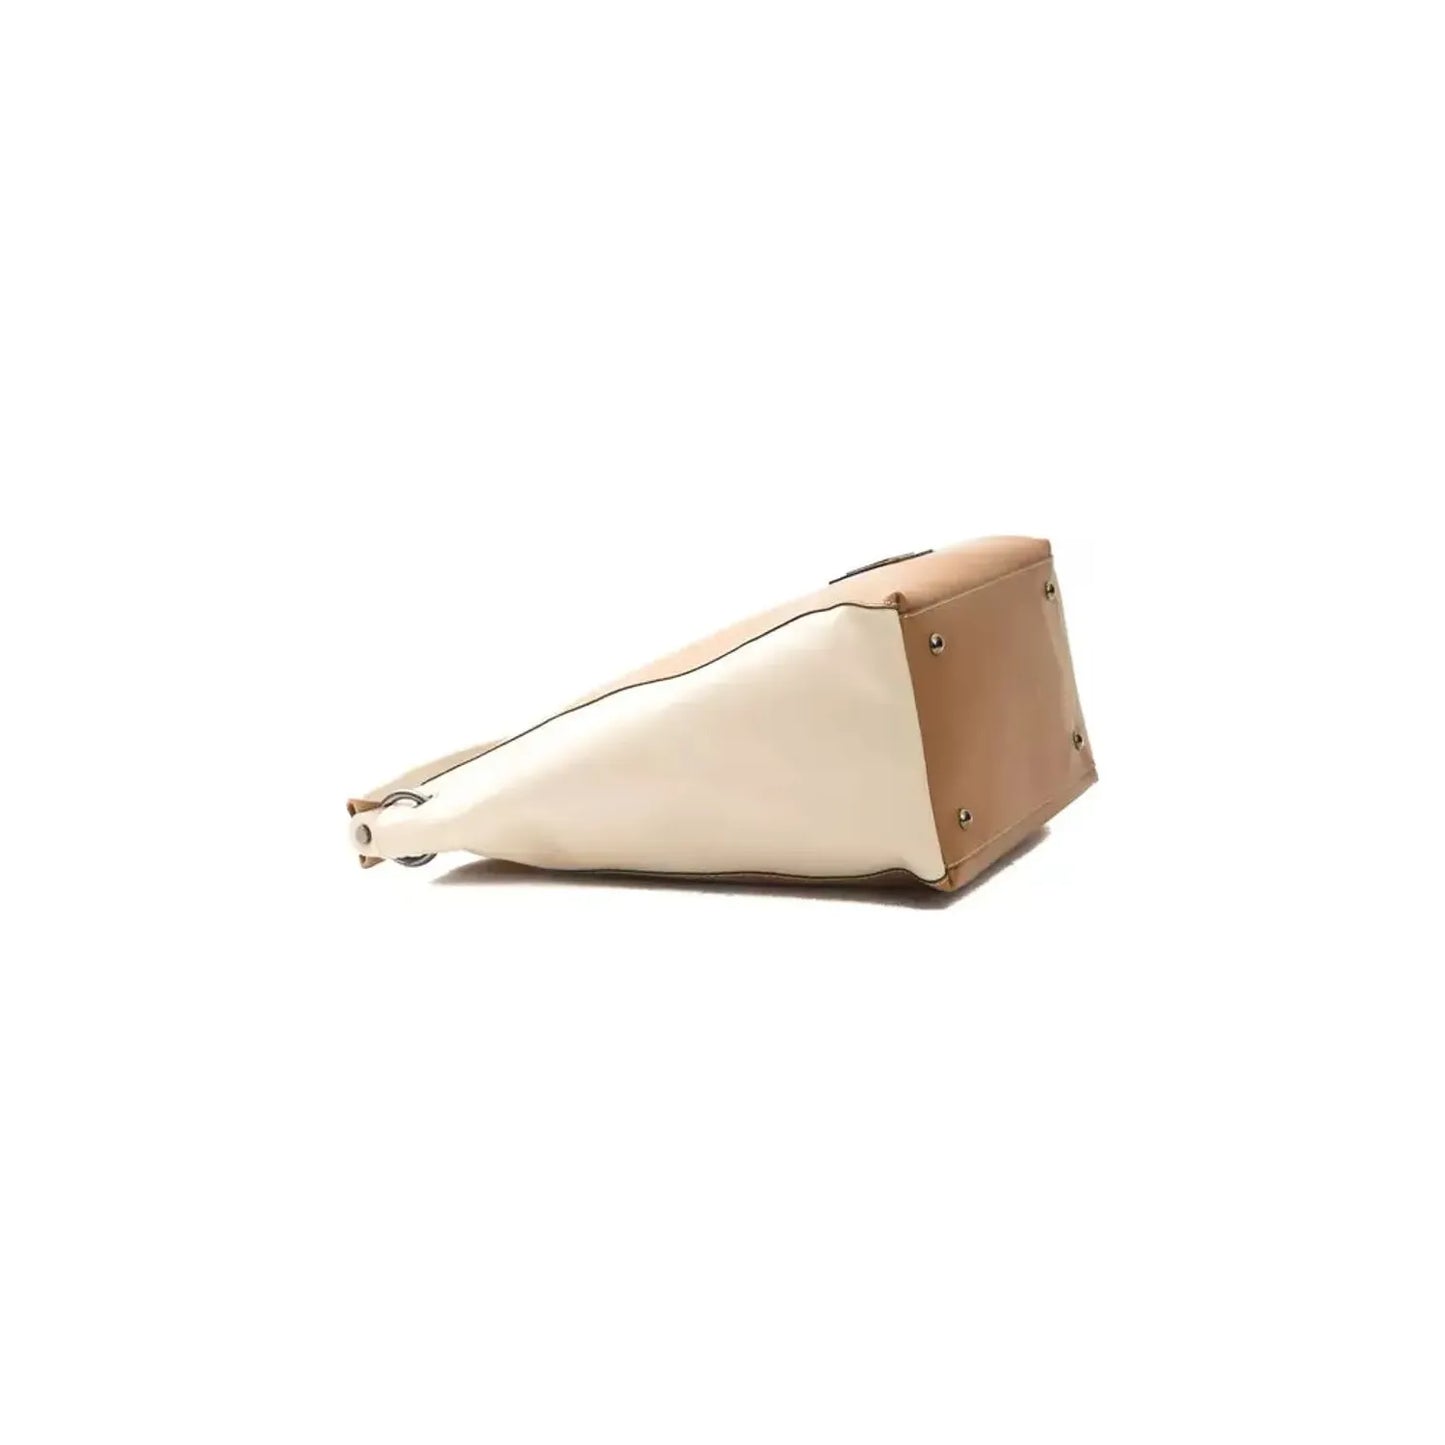 Pompei DonatellaElegant Leather Shoulder Bag in Rich BrownMcRichard Designer Brands£169.00